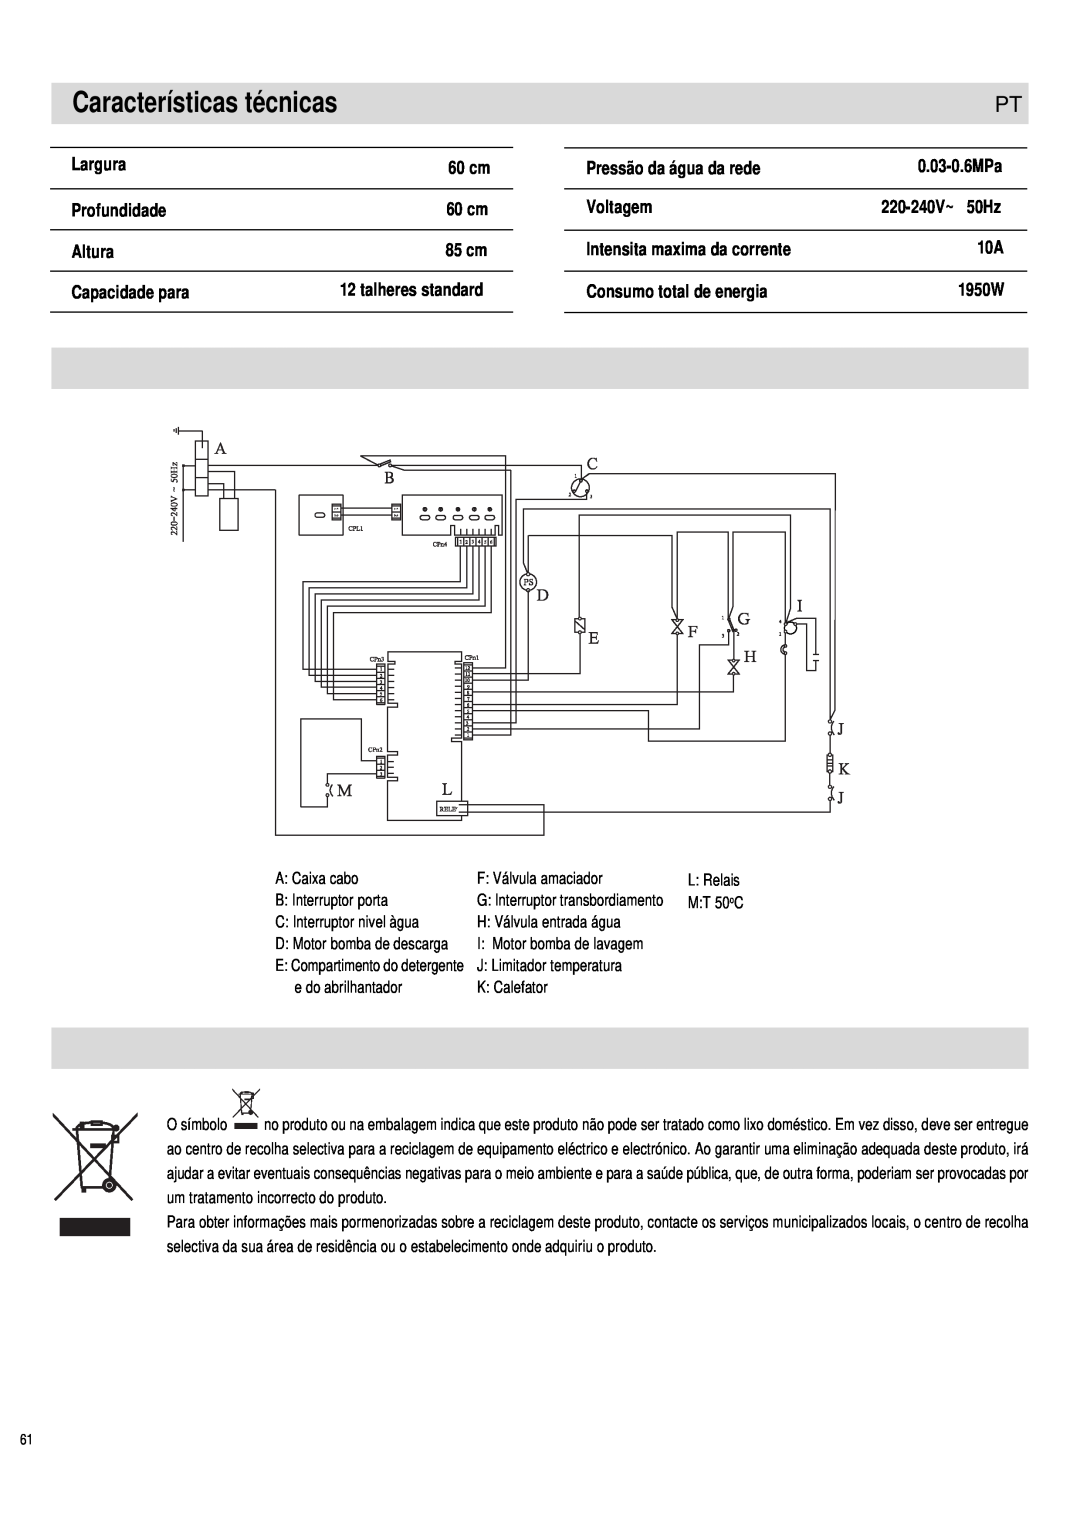 Haier DW12-PFE1 ME, DW12-PFE1 S manual Características técnicas, G Interruptor transbordiamento 